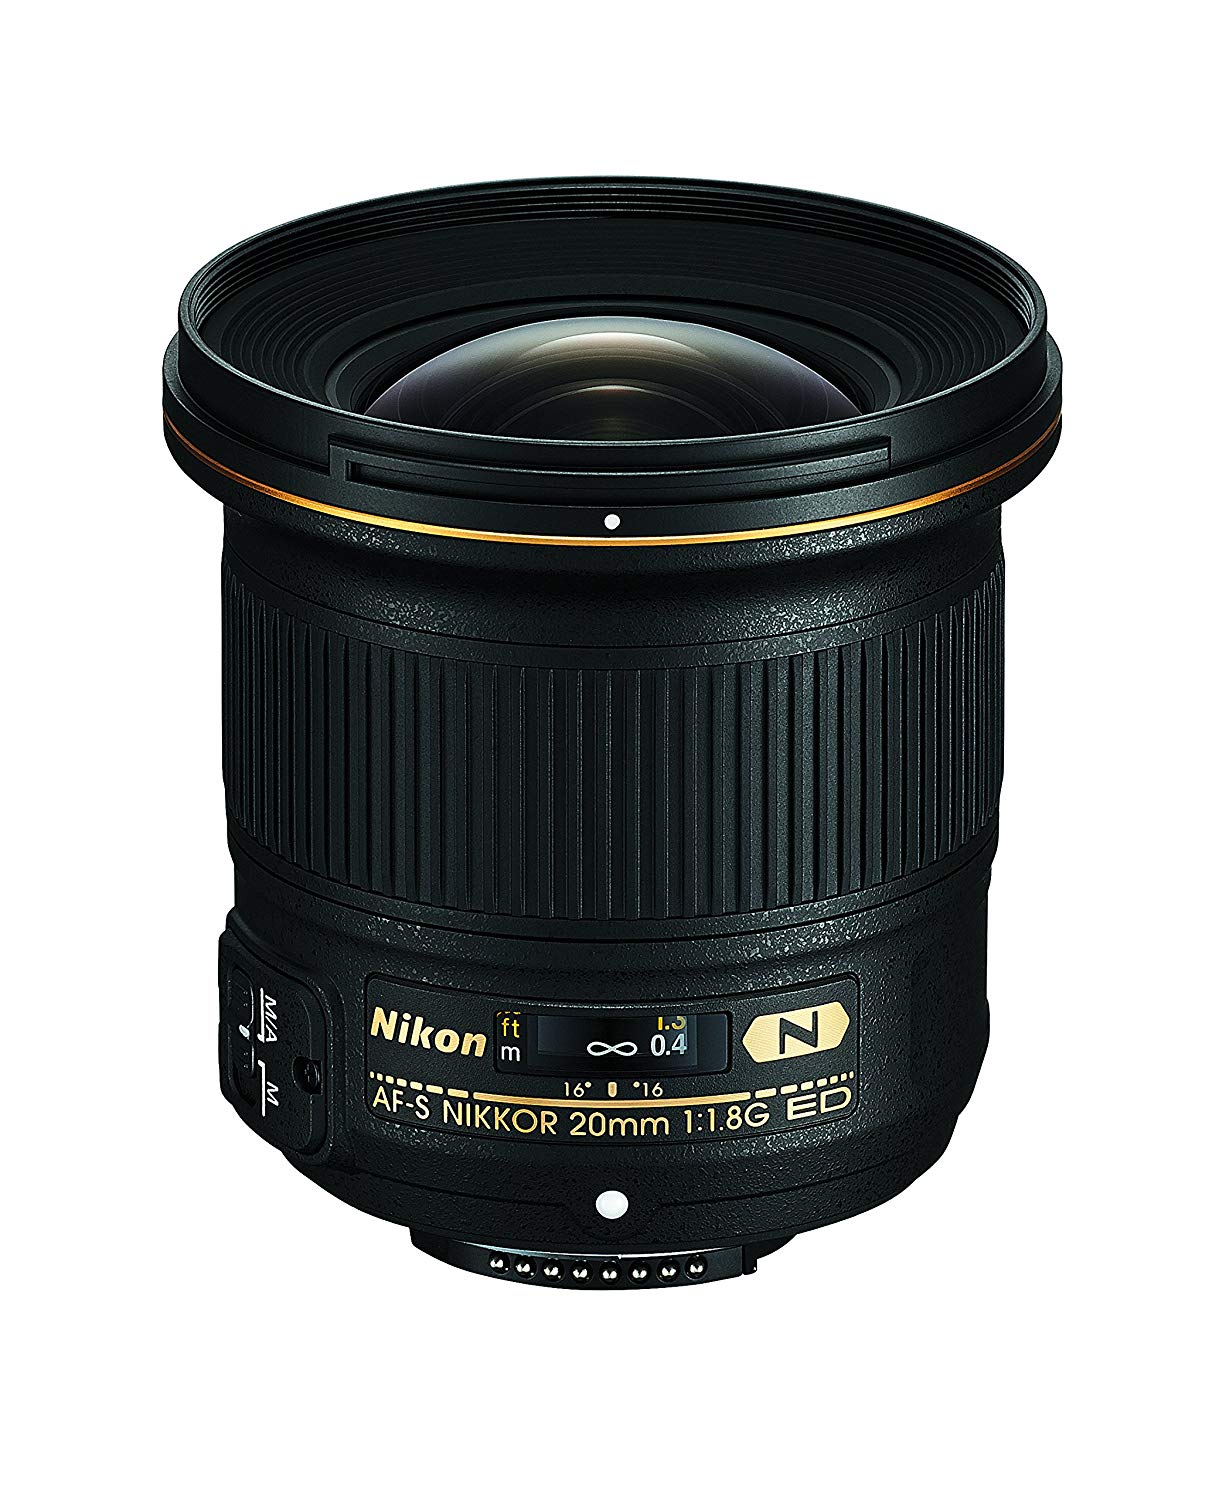 Nikon AF-S FX NIKKOR 20mm f / 1.8G ED Фиксированный объ...